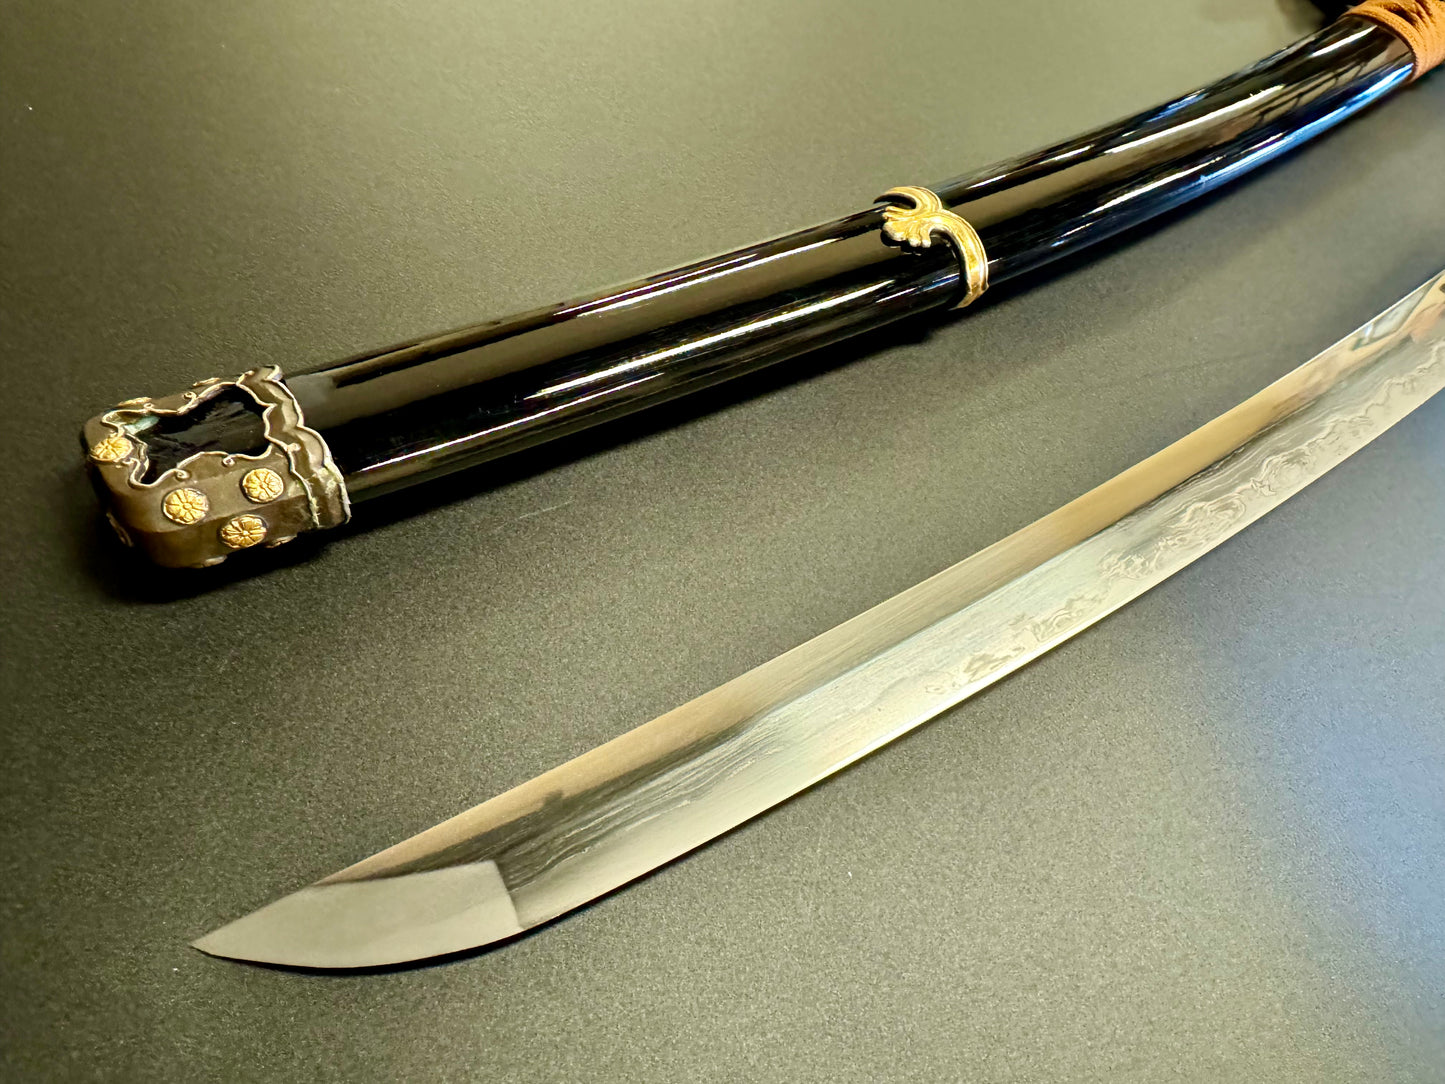 Legacy Blades Golden Imperial Tachi -  - Sanmai folded steel, clay tempered, 3-shade polish